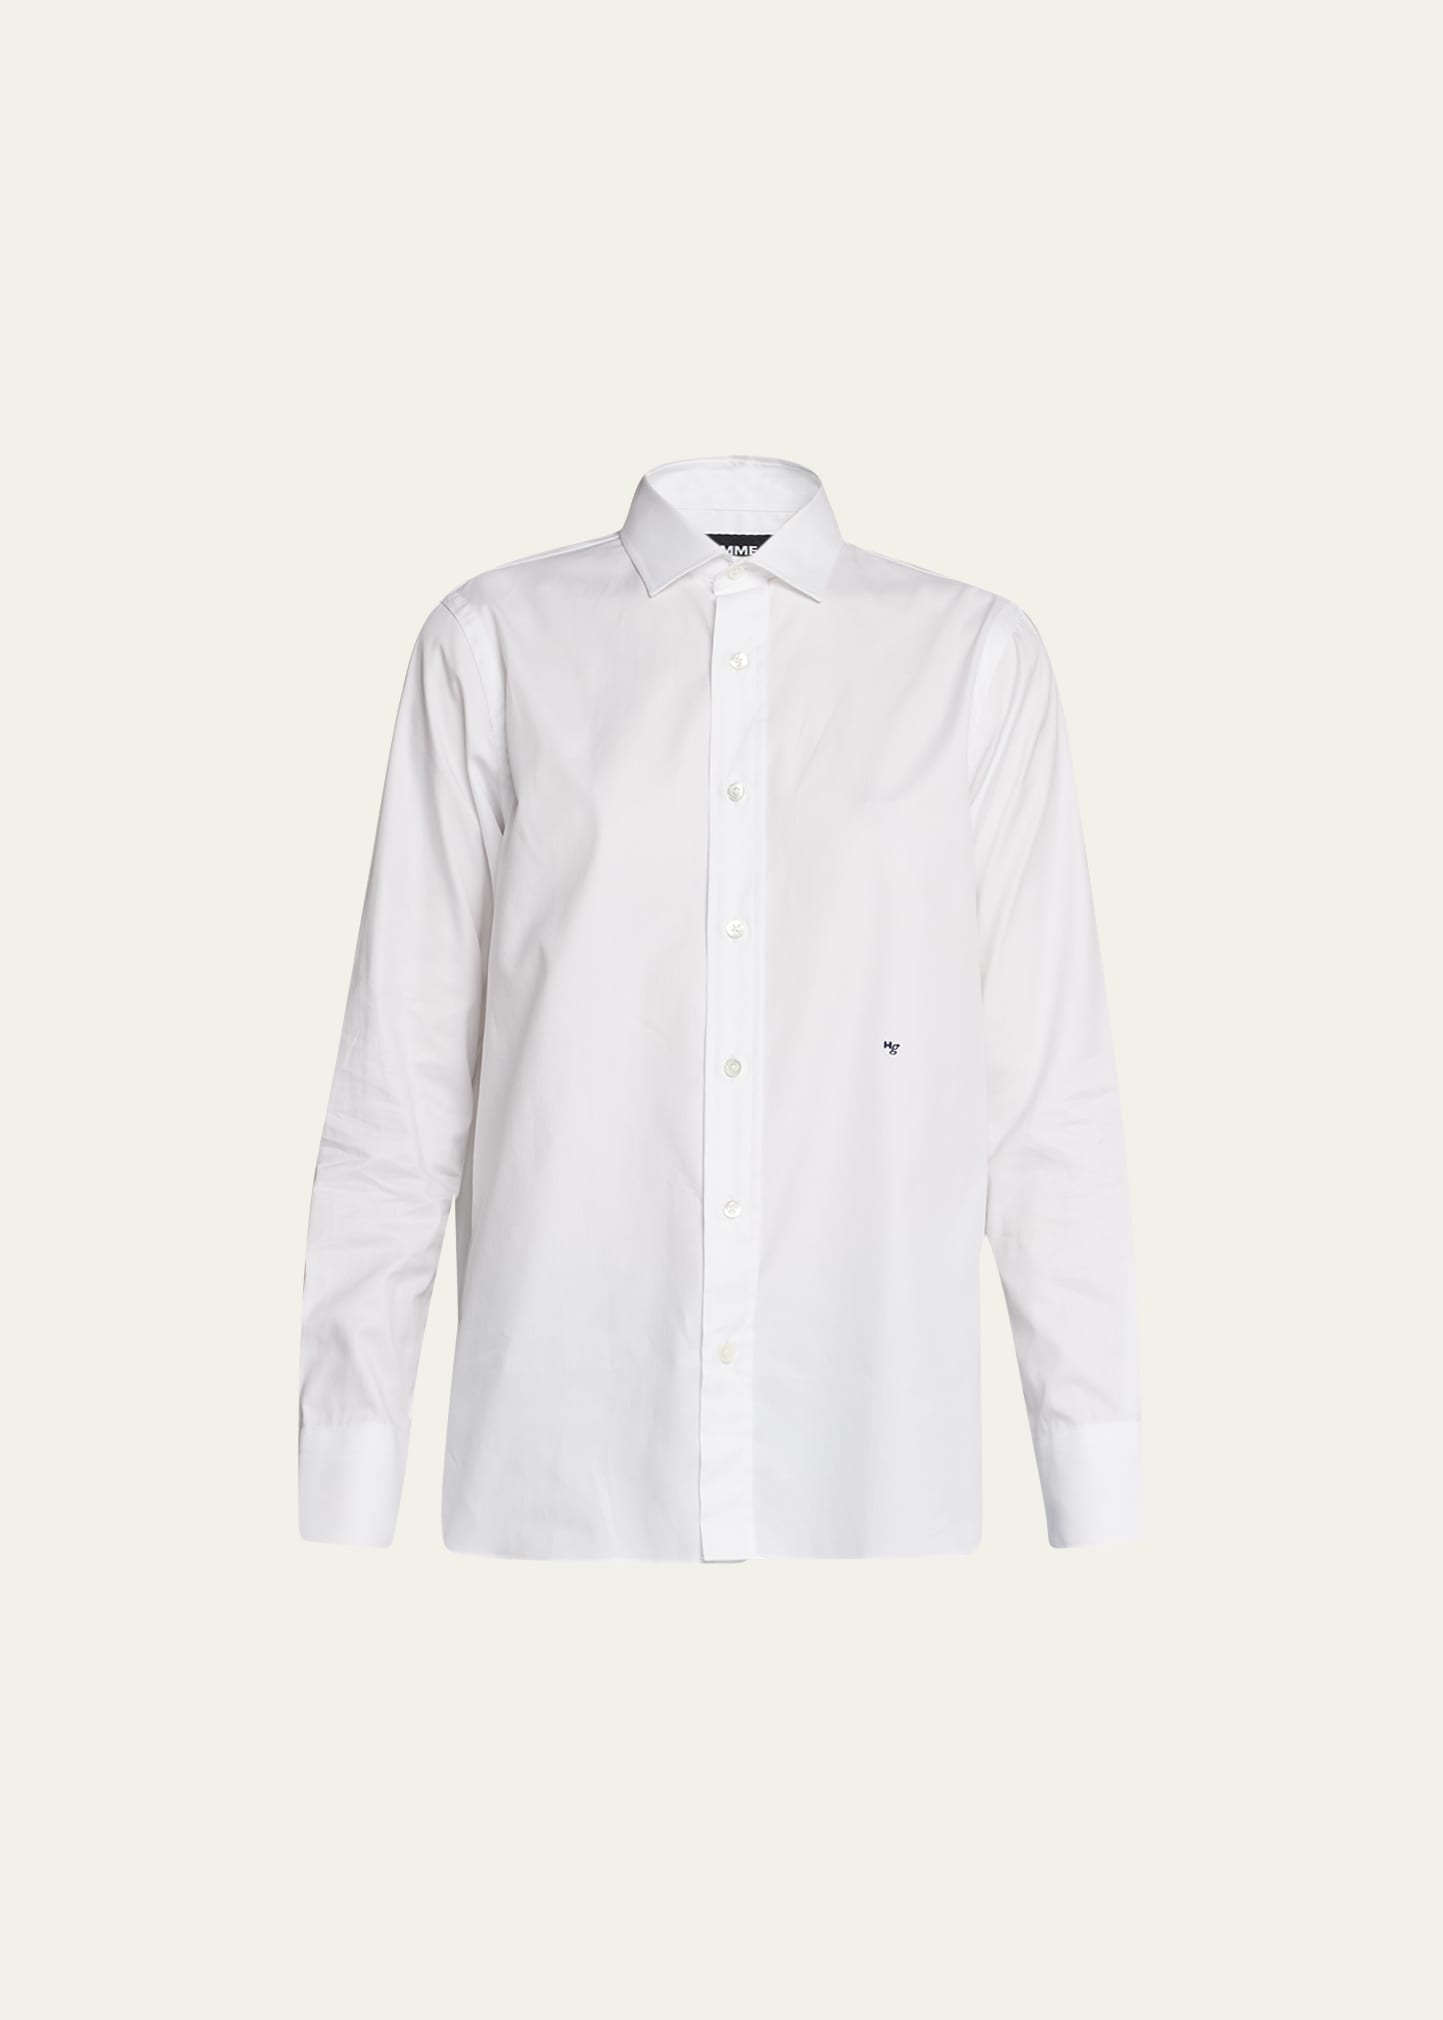 HOMMEGIRLS Classic Button-Up Cotton Shirt